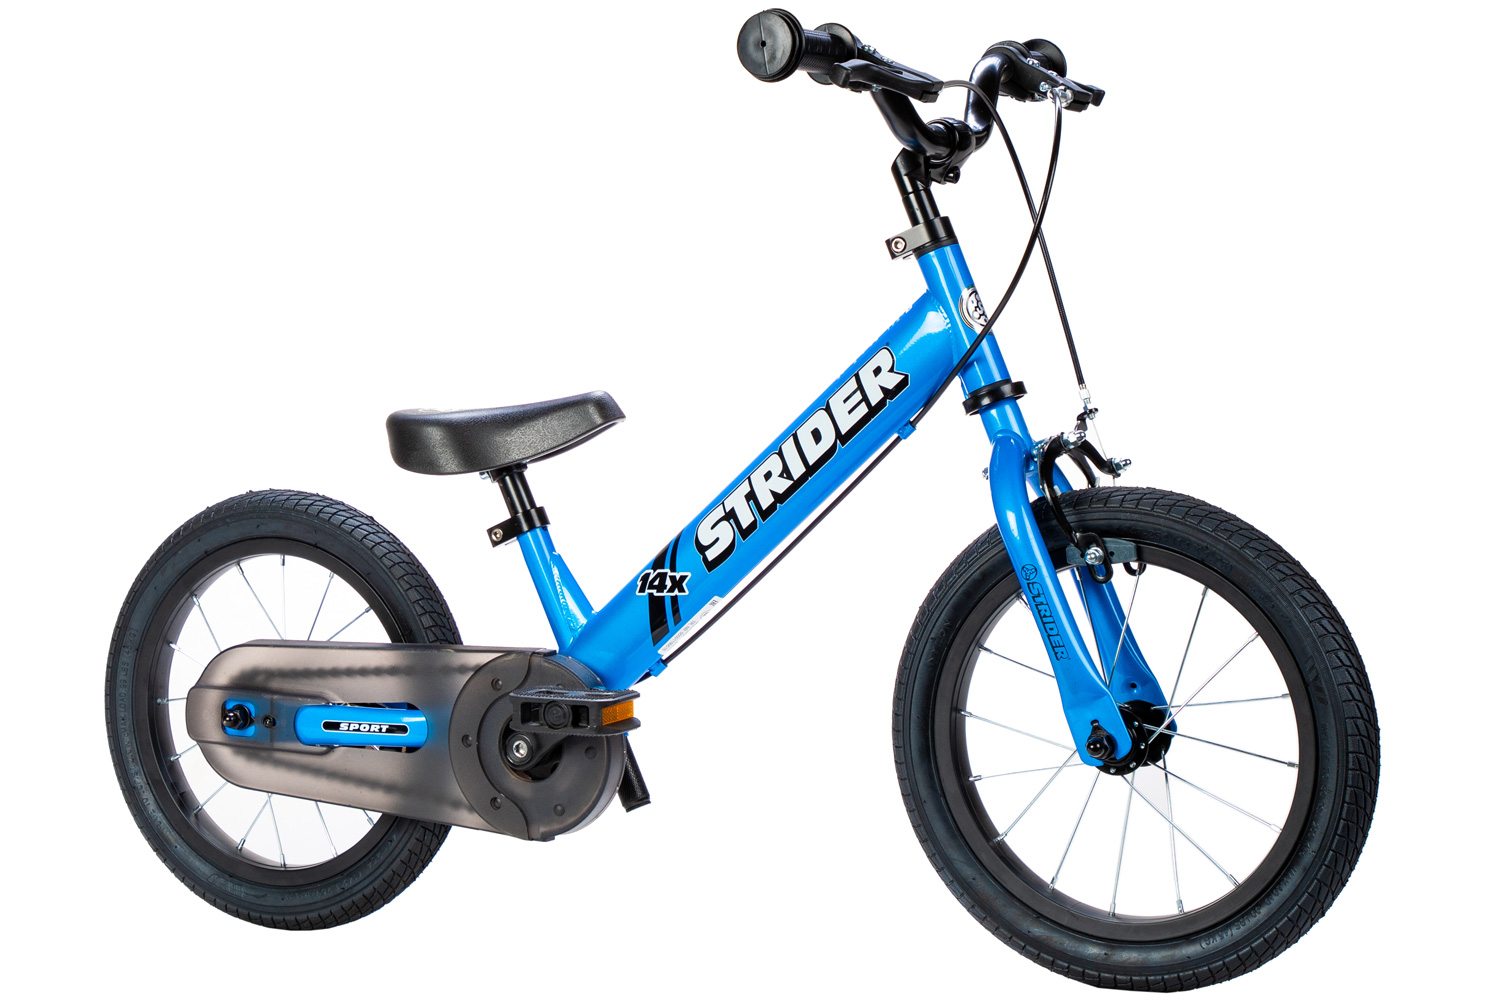 STRIDER 14x Sport BLUE Balance Bike Learn To Ride 